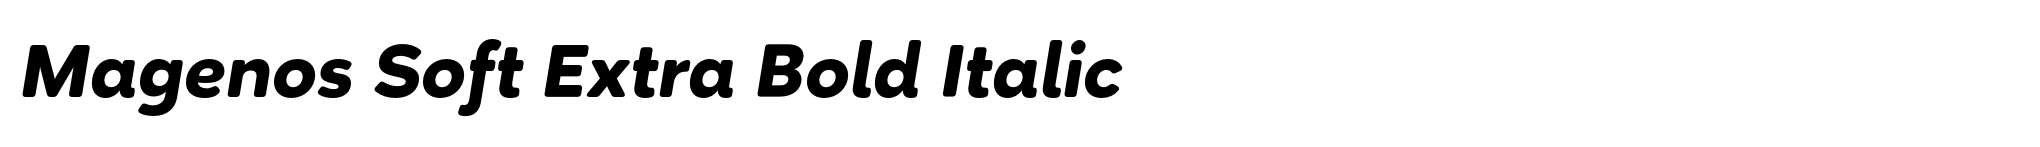 Magenos Soft Extra Bold Italic image